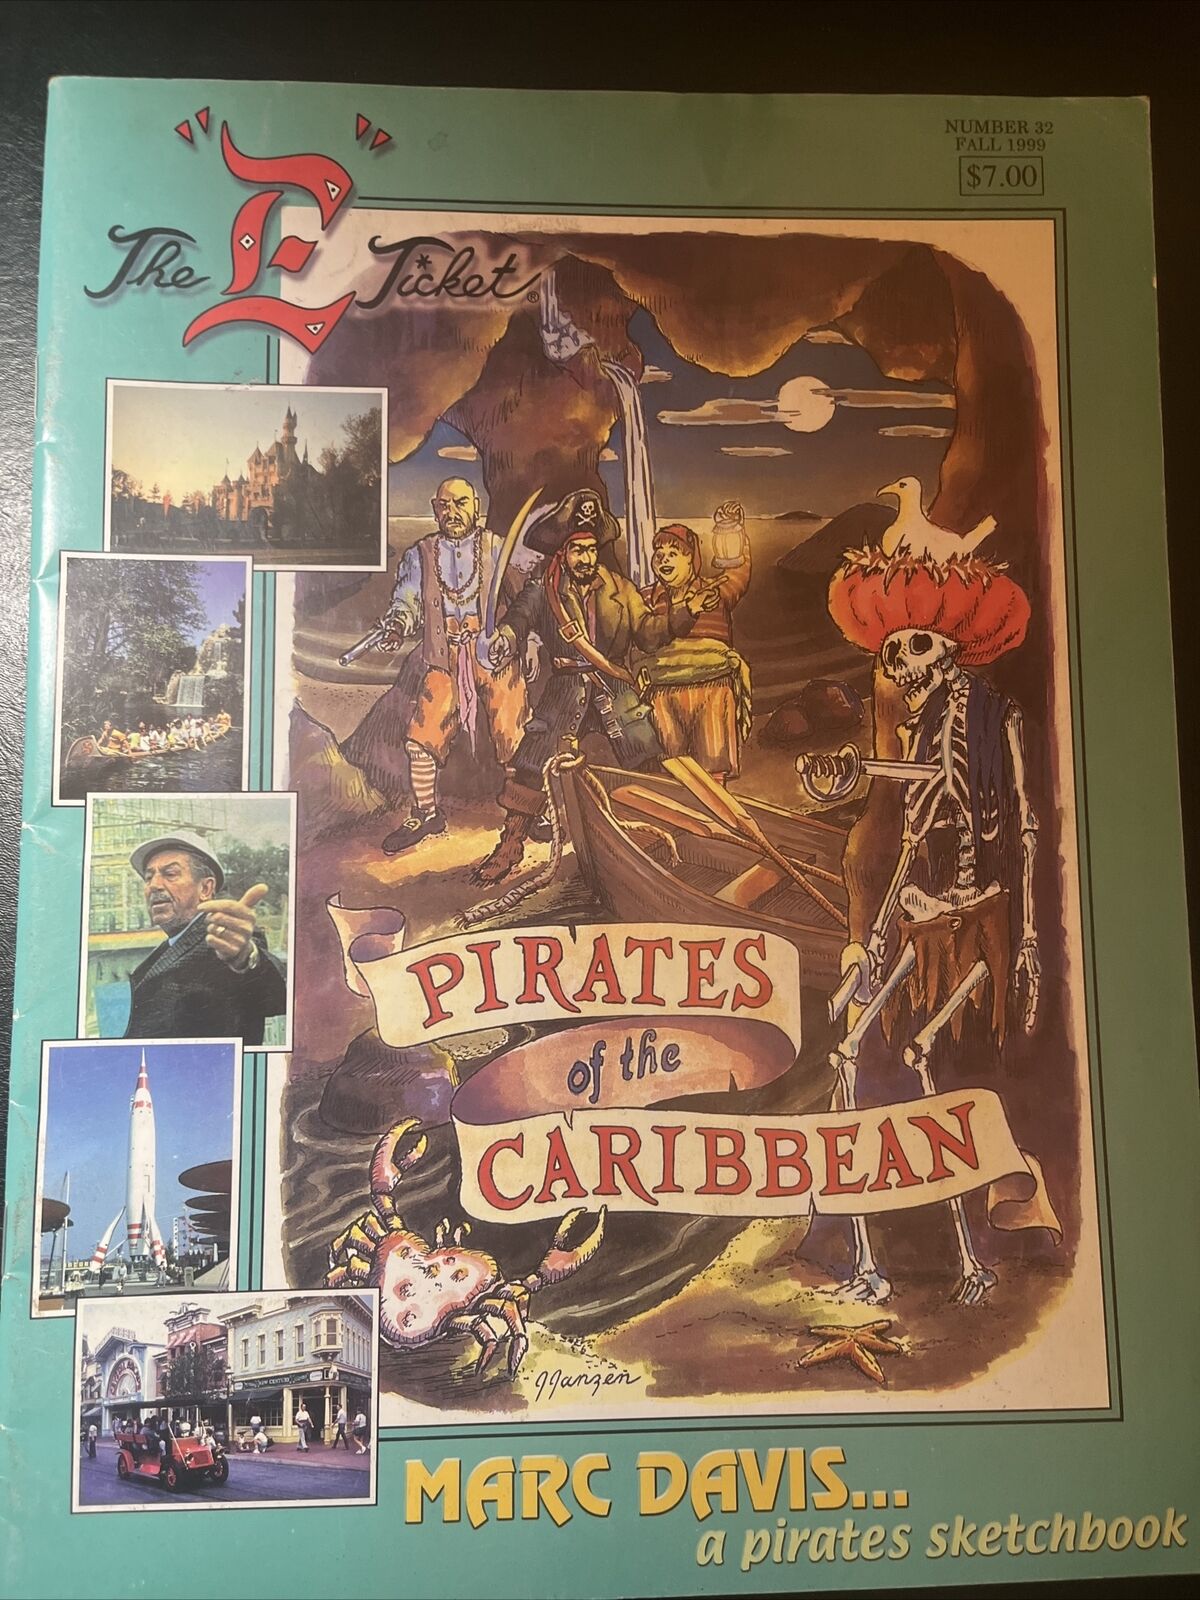 MINT   The E Ticket Magazine #32 1999 Disneyland Pirates Of The Caribbean NEW 